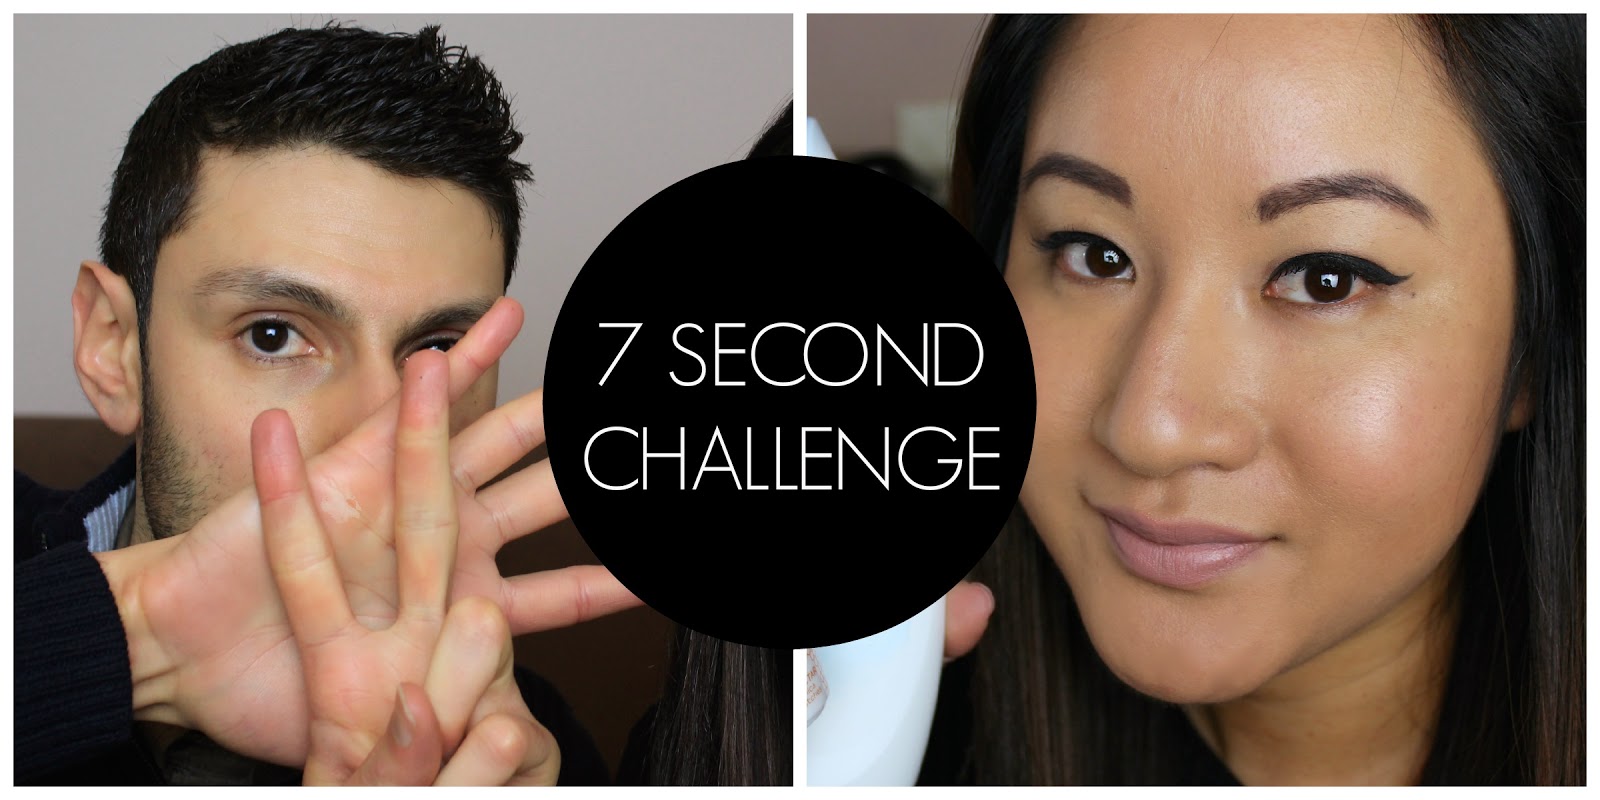 7 second challenge